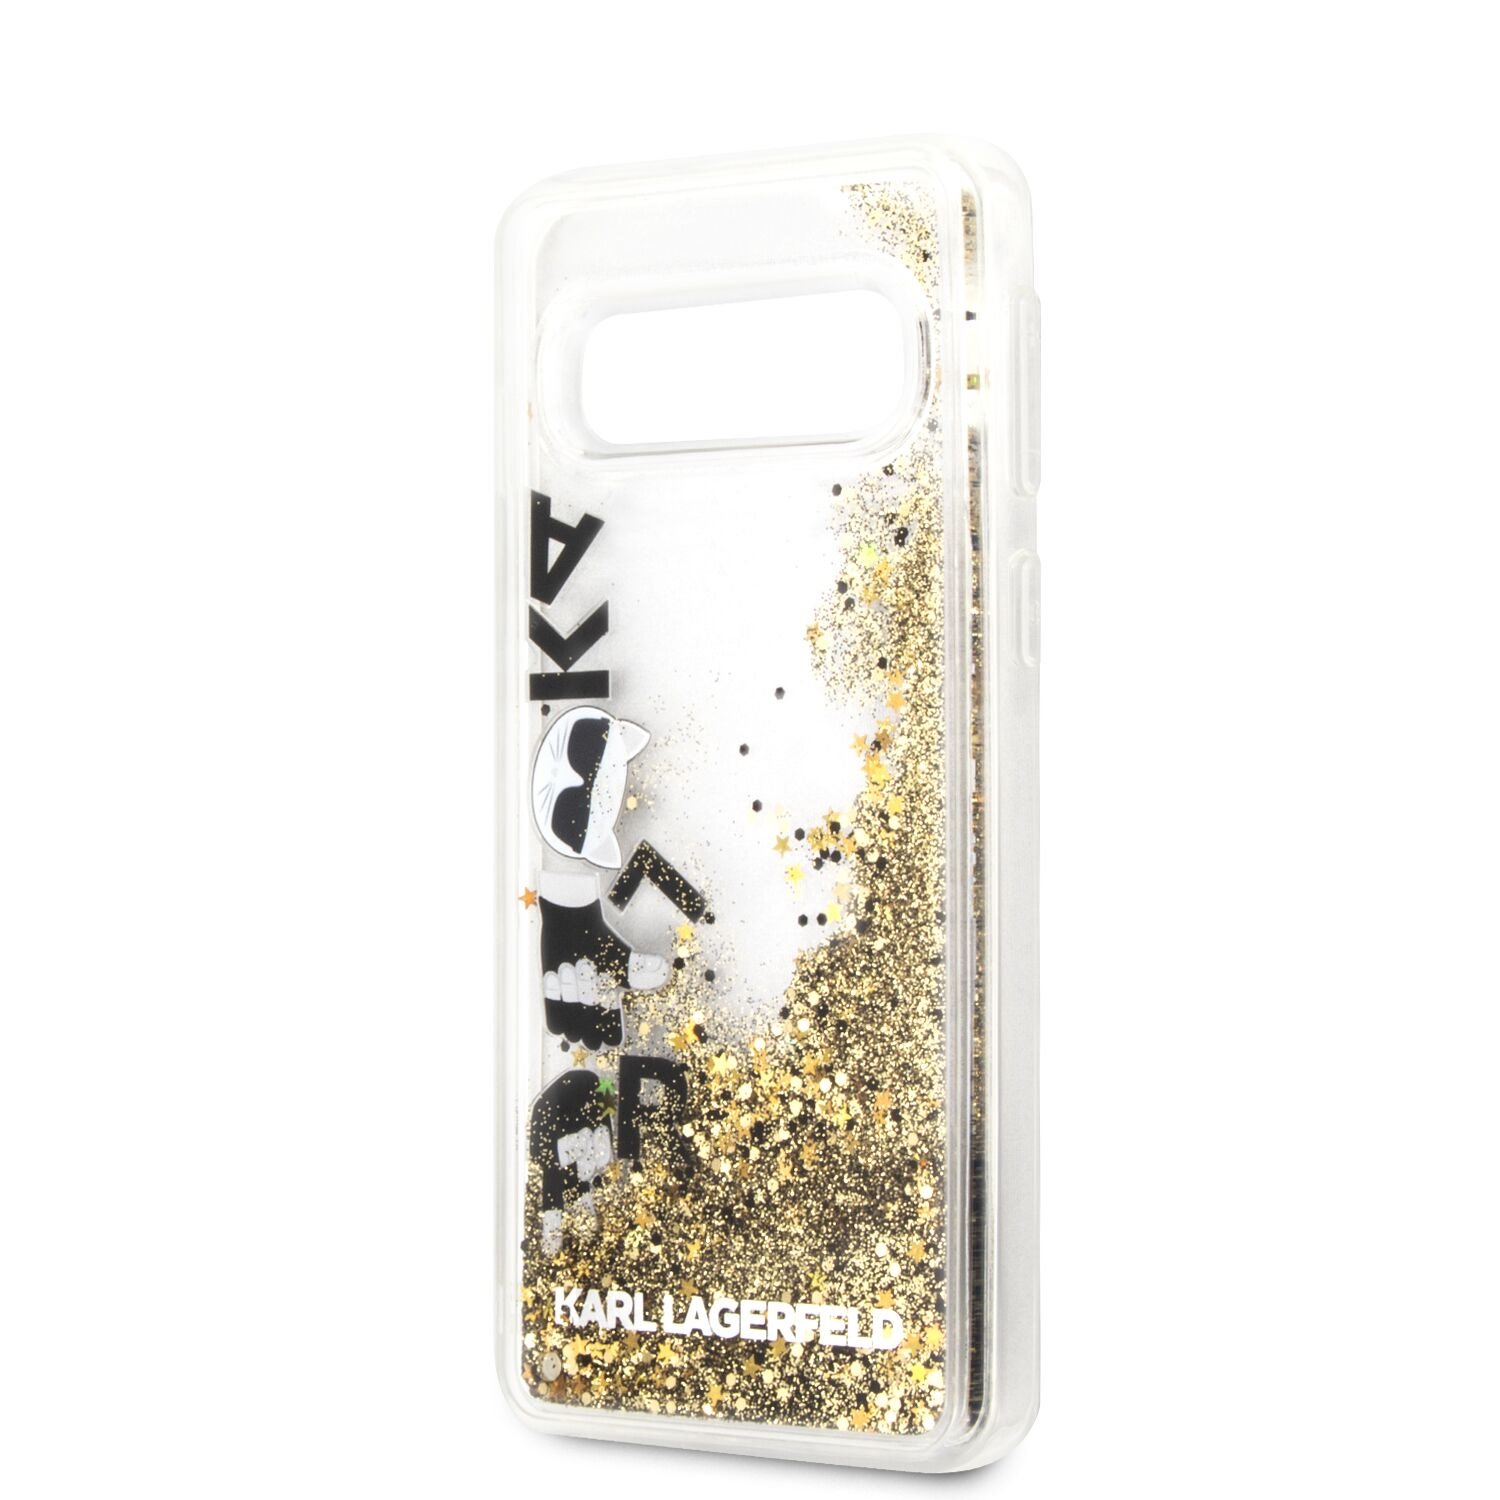 Silikónové puzdro Karl Lagerfeld Glitter Floatting pre Samsung Galaxy S10 +, black gold